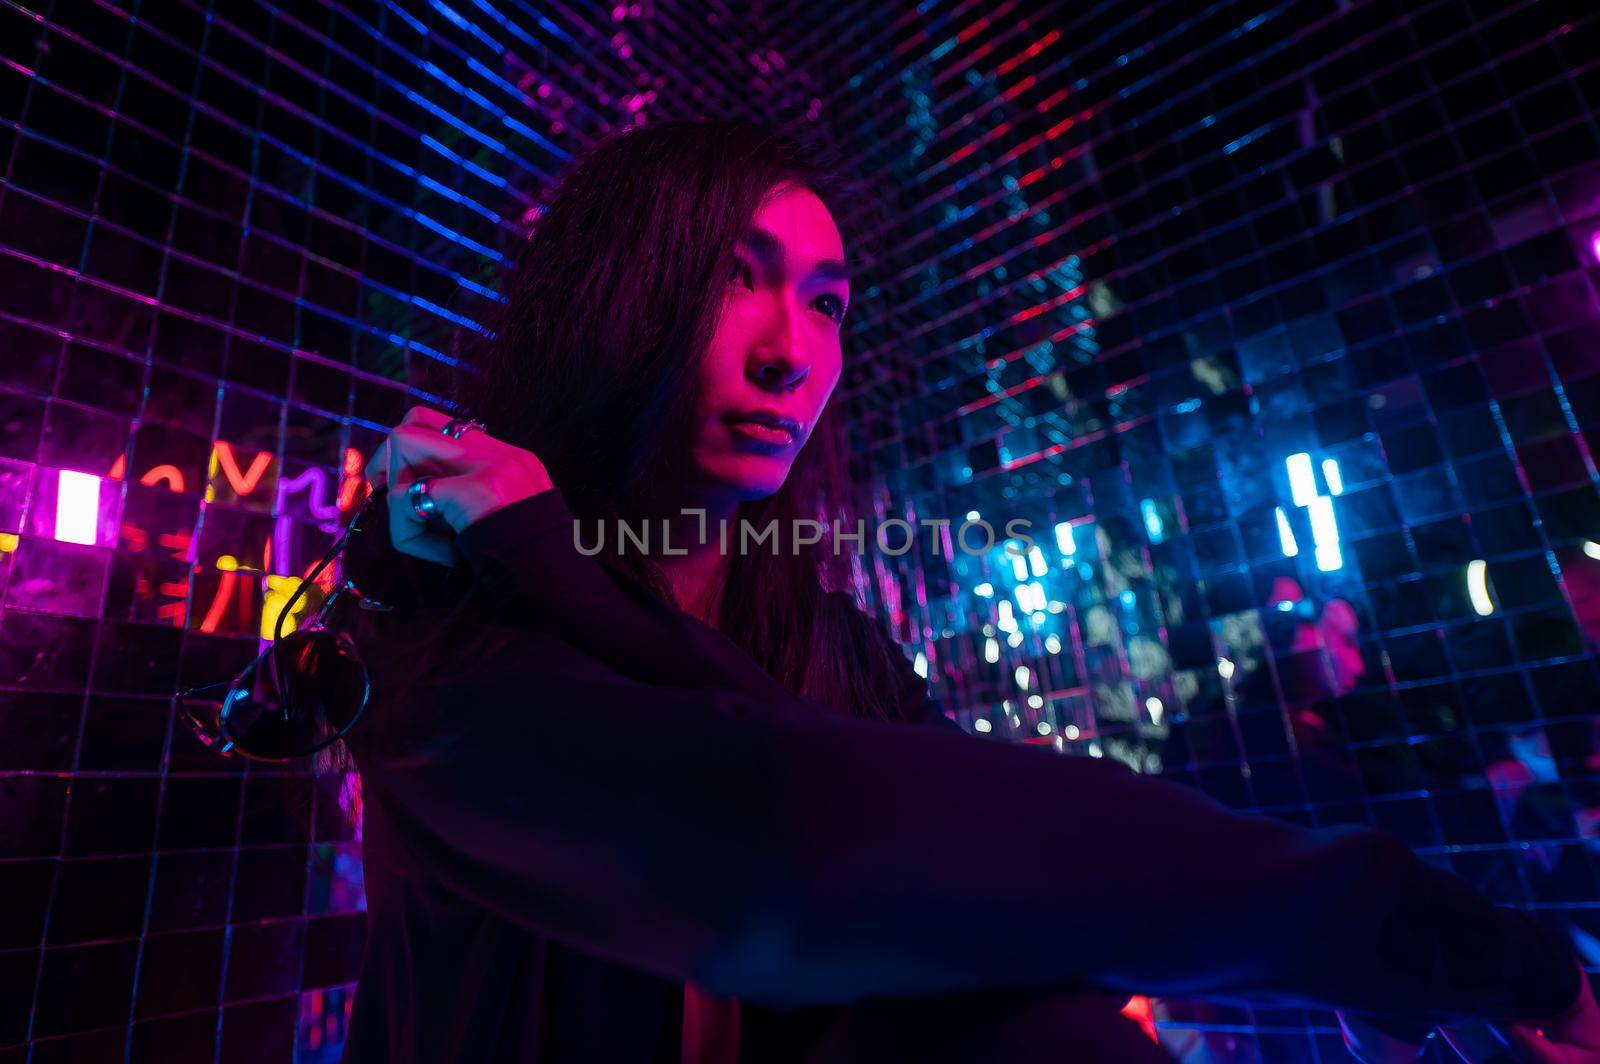 Asian man holding sunglasses. Neon photo studio. by mrwed54